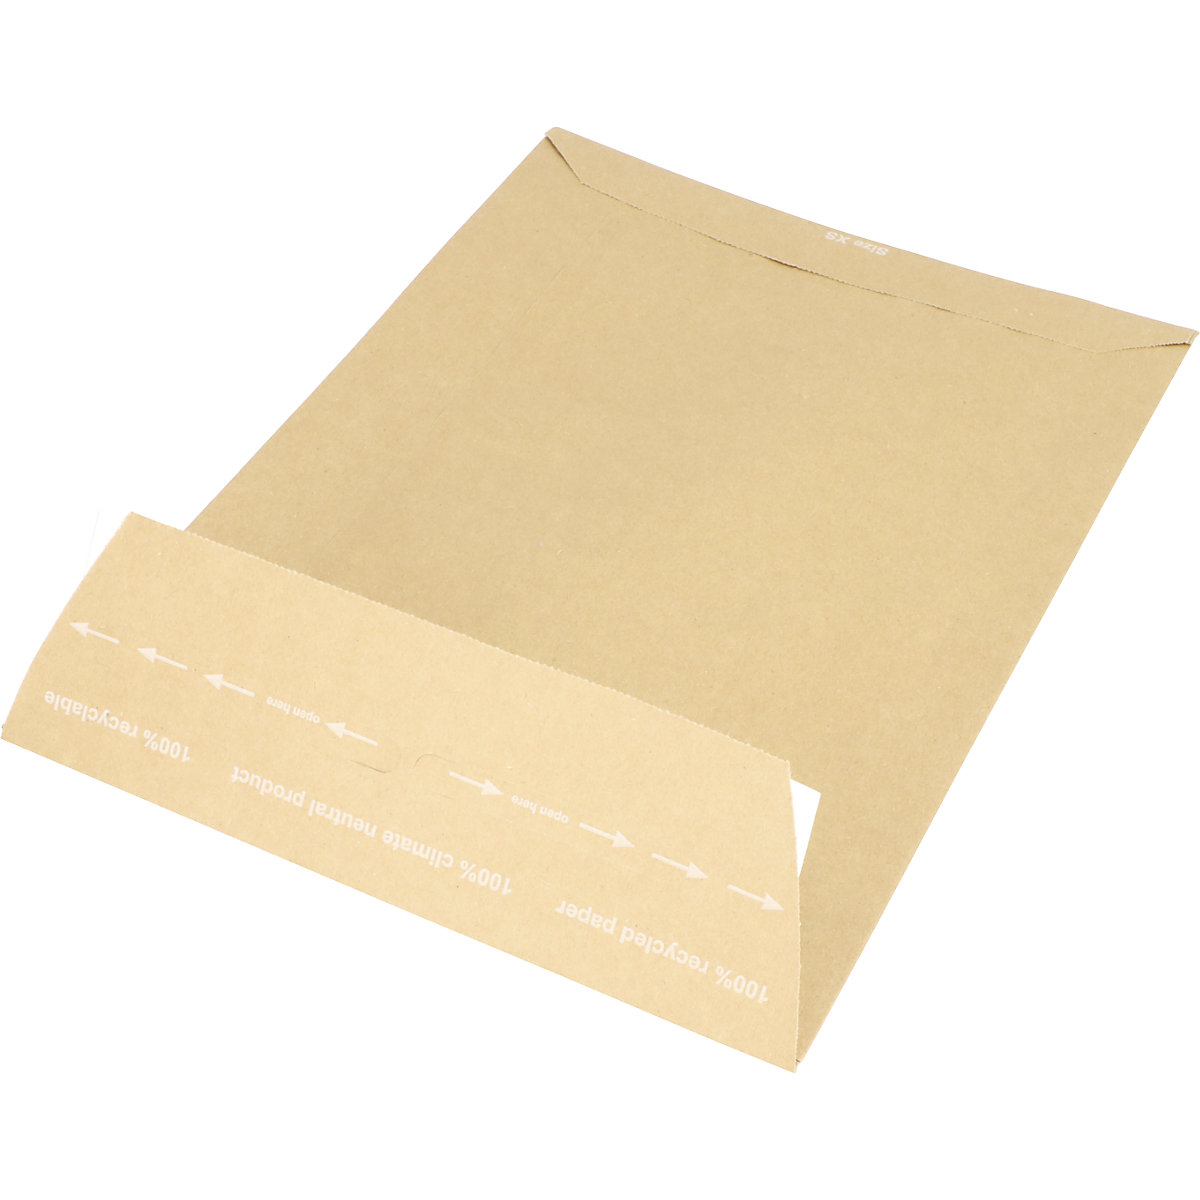 Versandtasche aus Papier E-Commerce terra, retourengeeignet, LxB 350 x 250 mm, VE 250 Stk, ab 5 VE-4